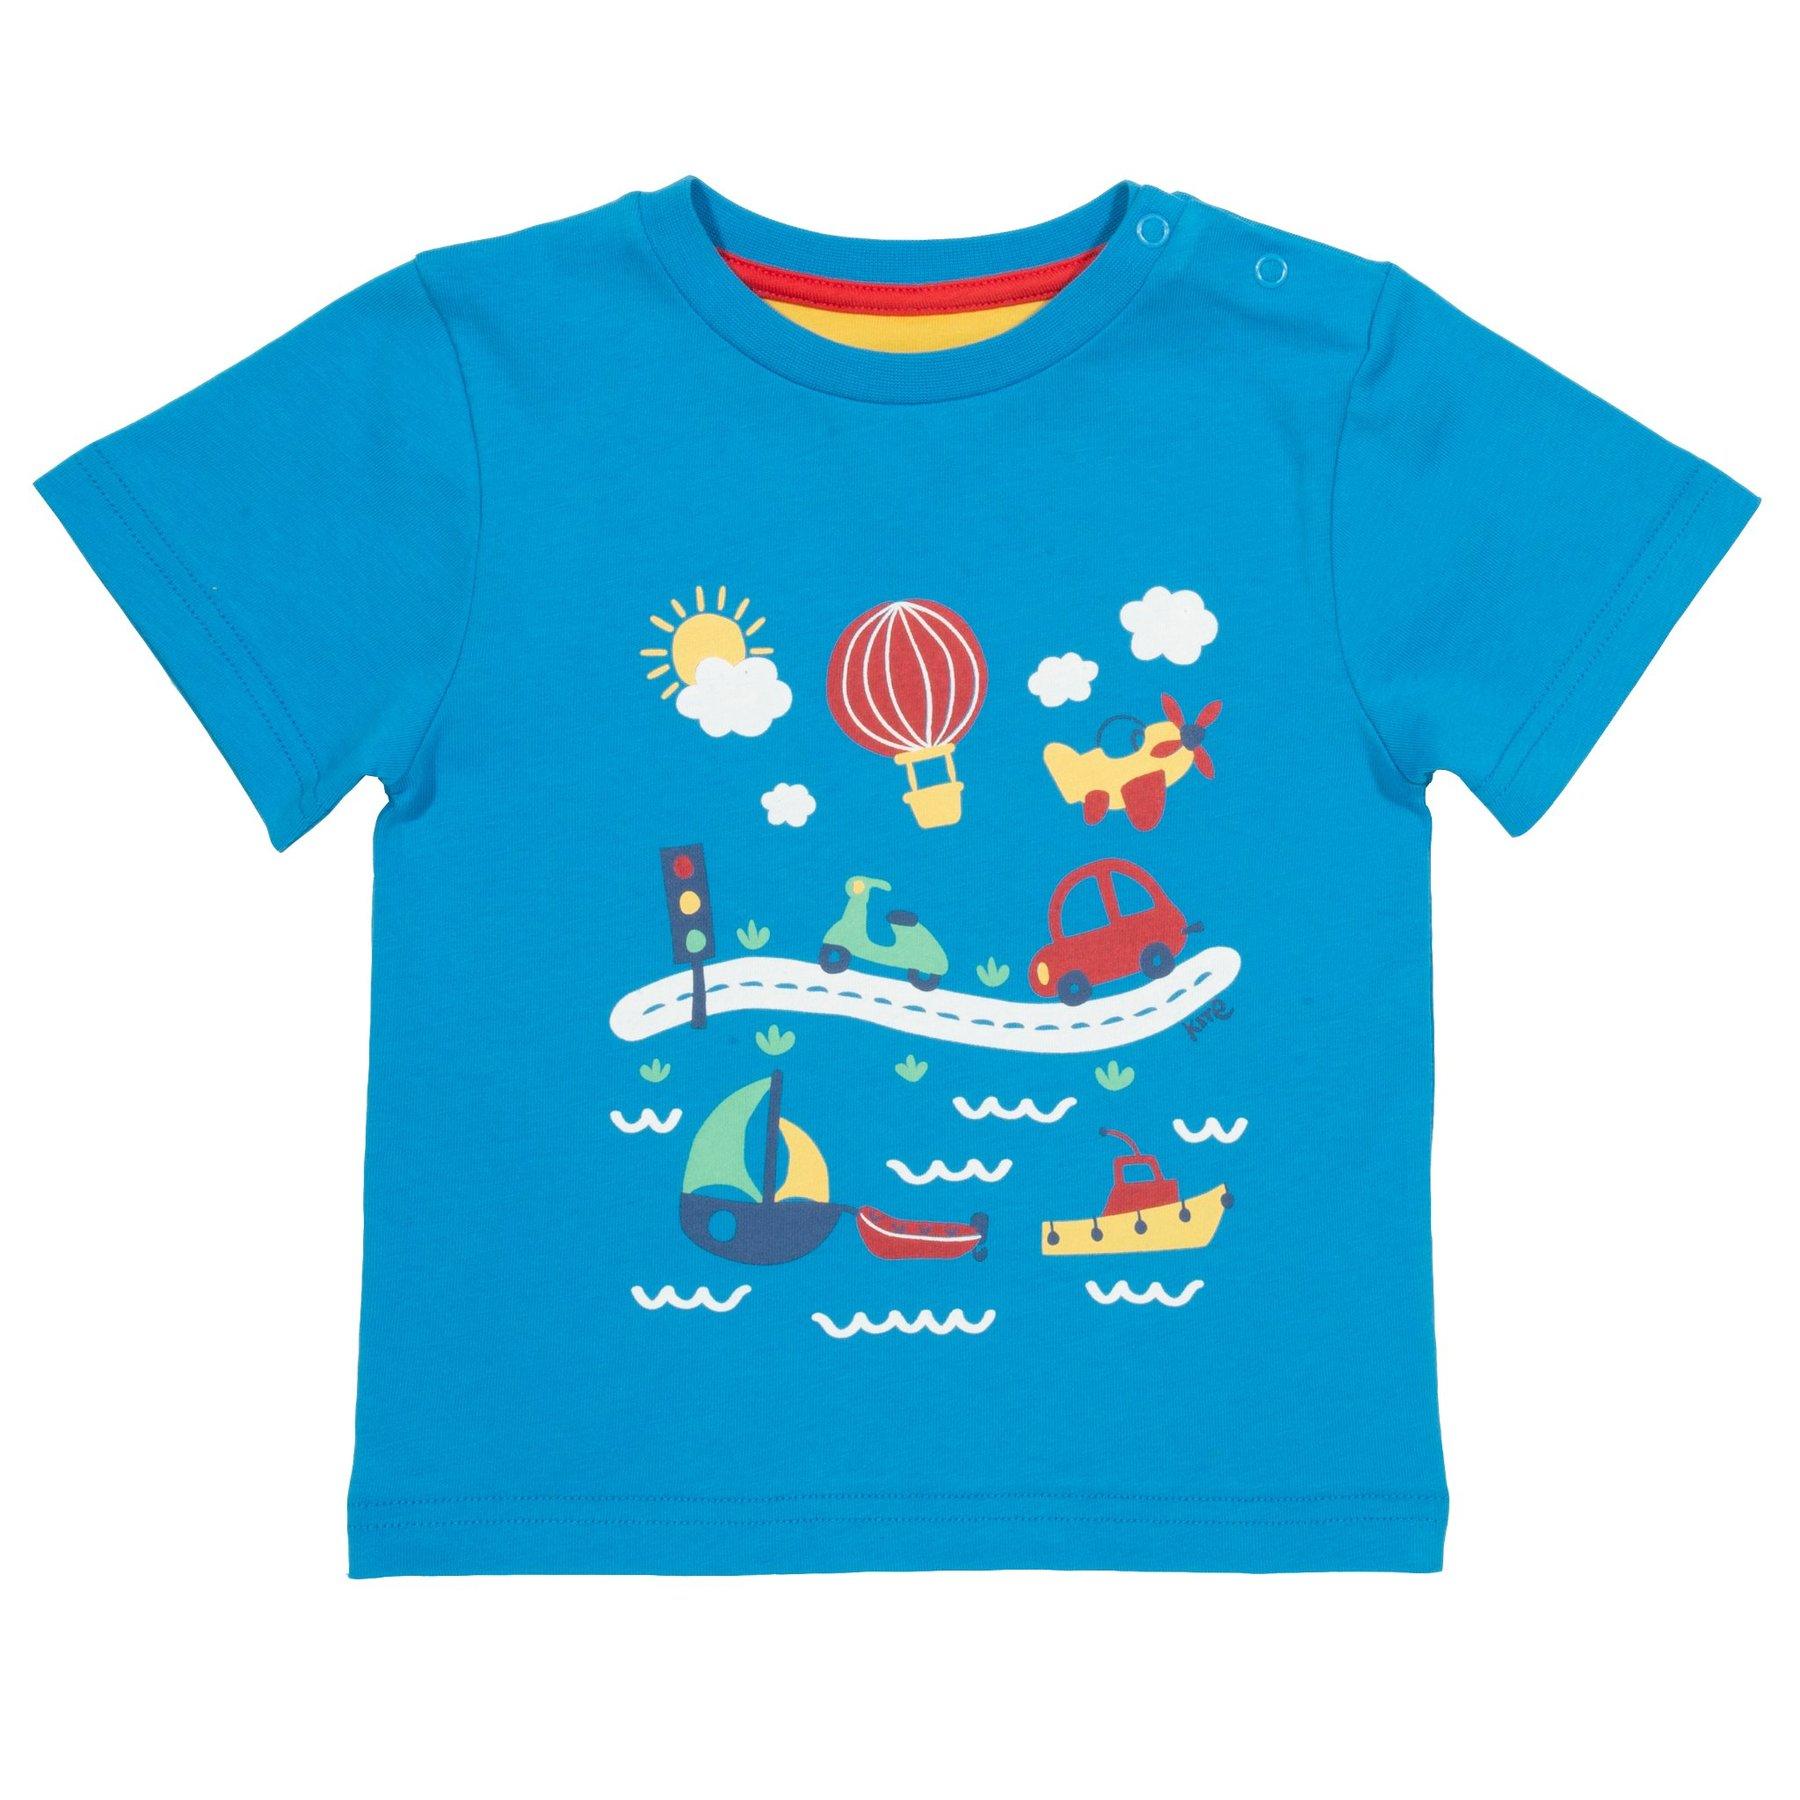 Kite Clothing Go-Go-Go T-Shirt front